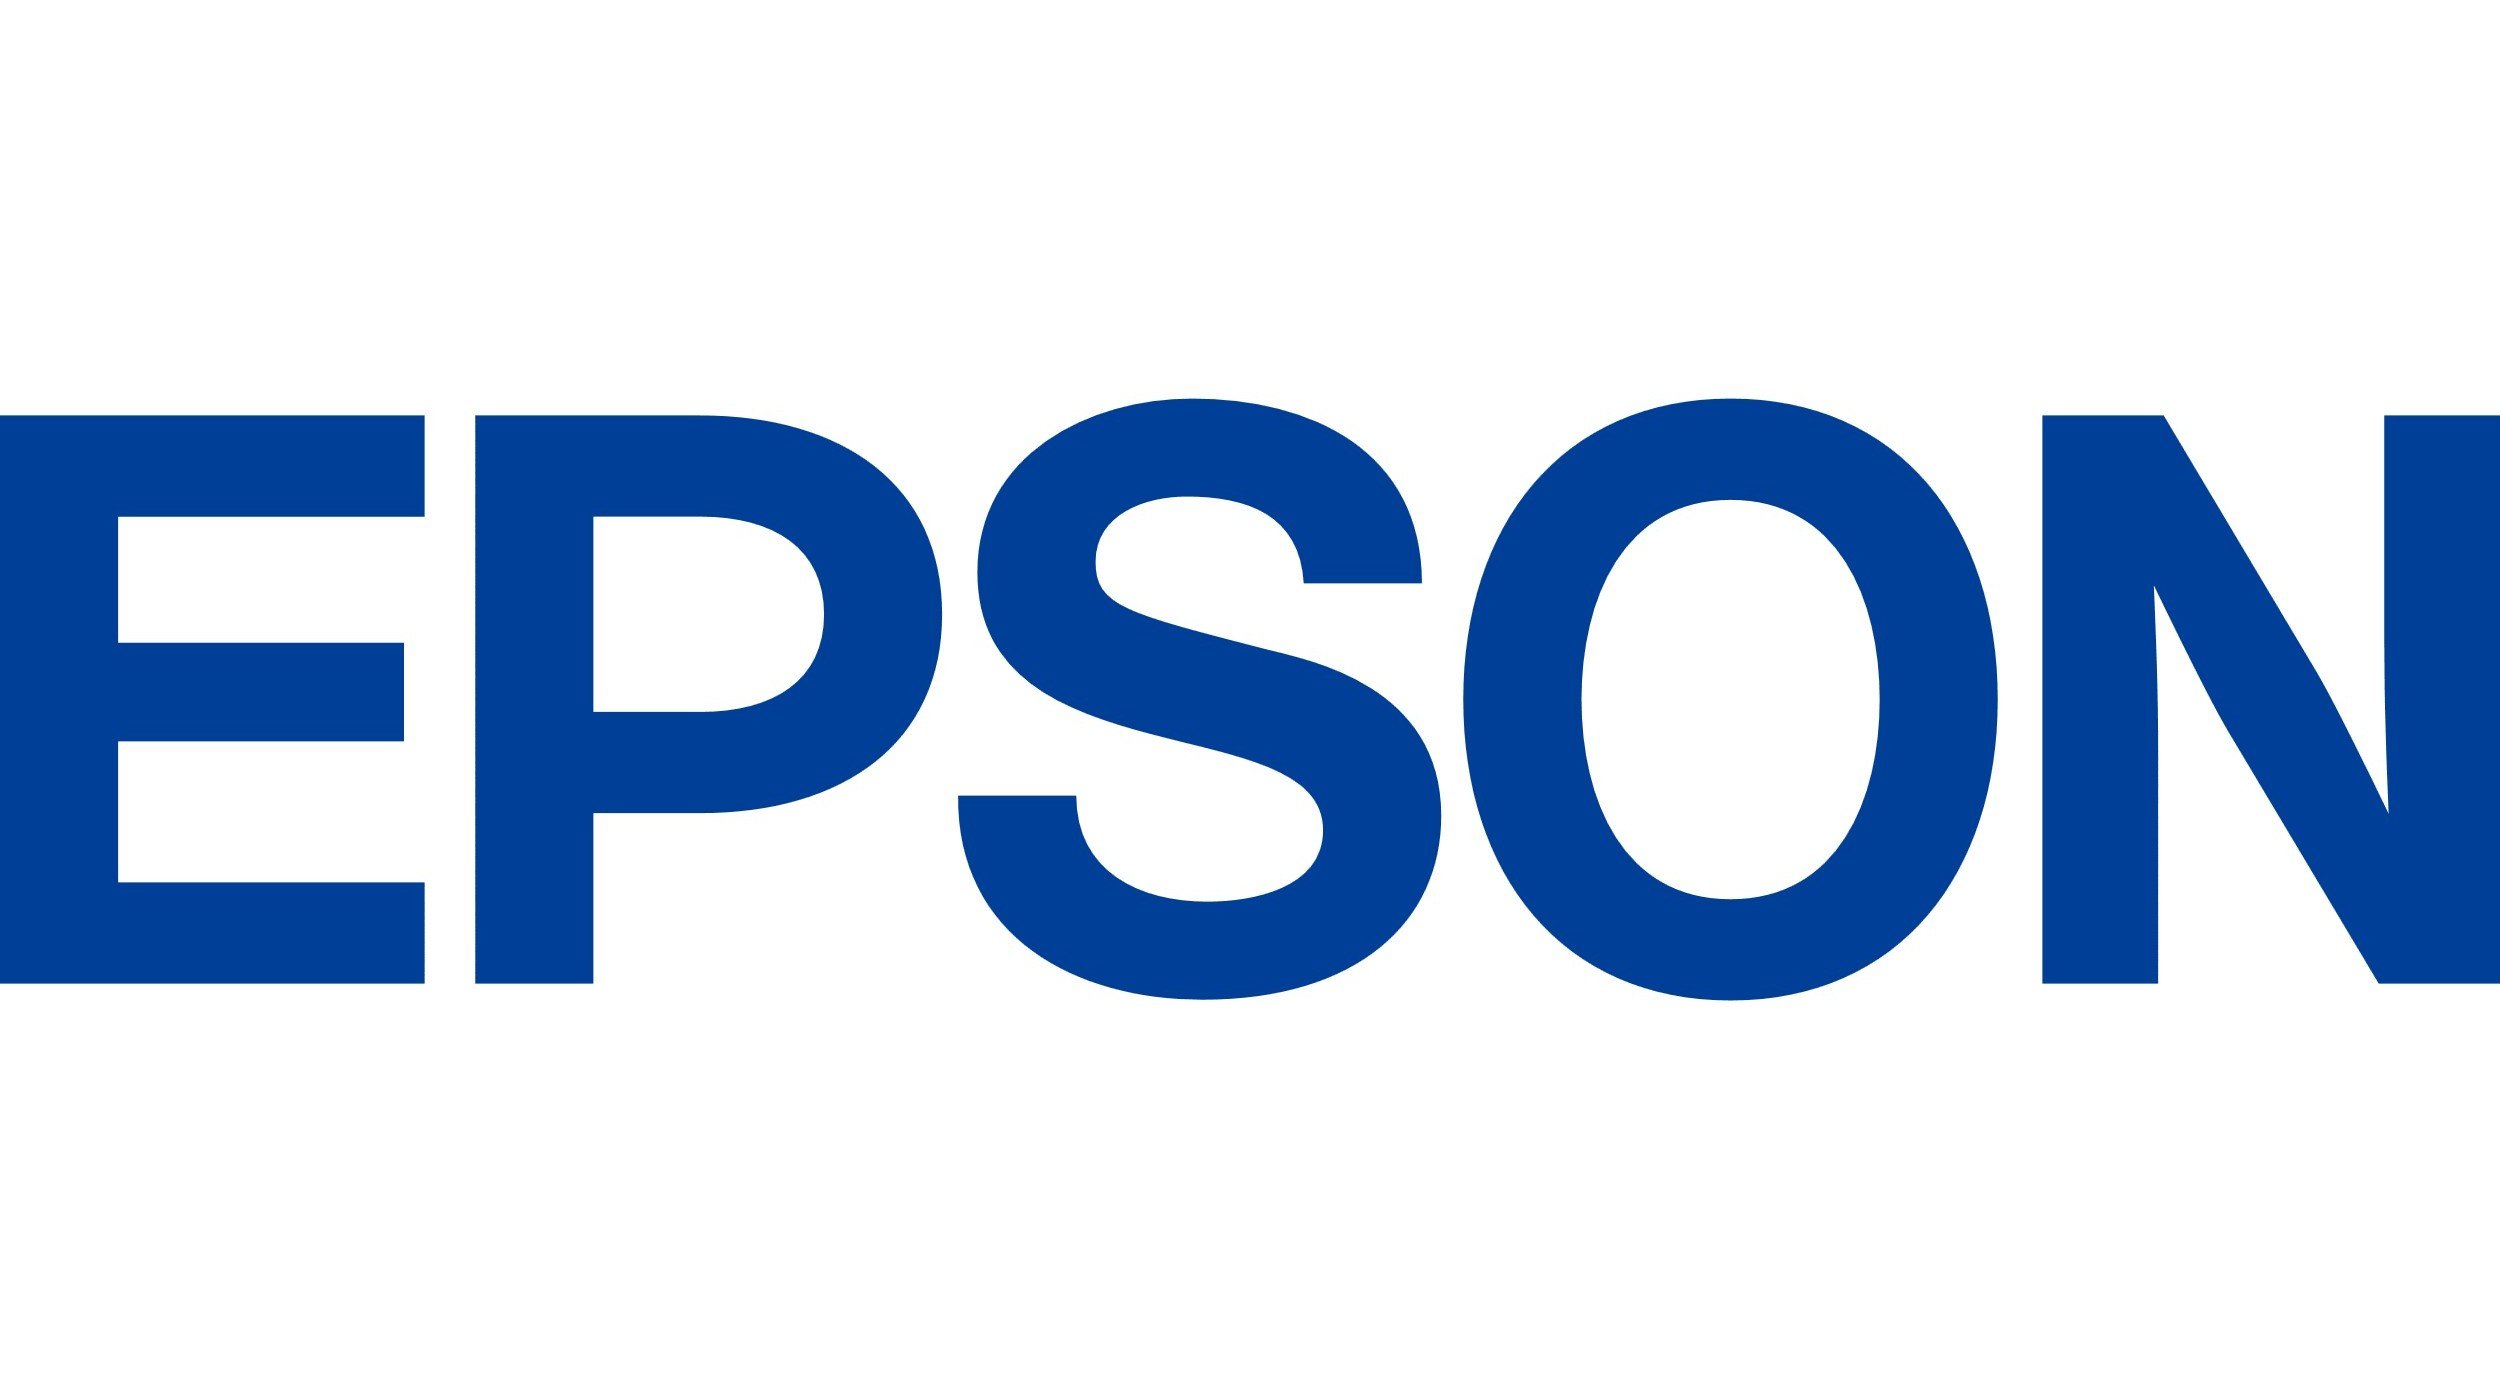 Epson-logo.jpg